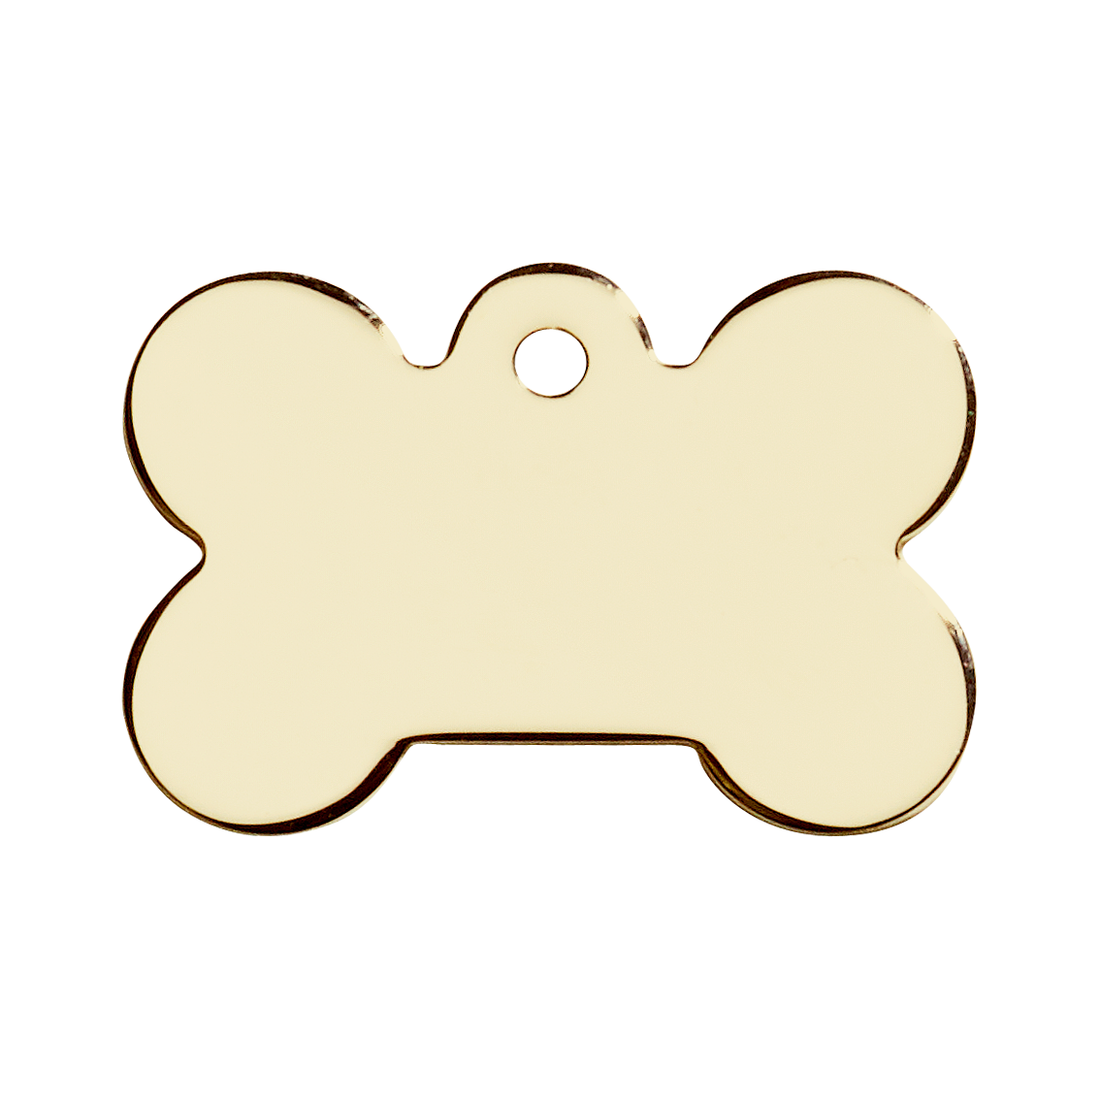 Prestige Hundemarke in Knochenform - Gold